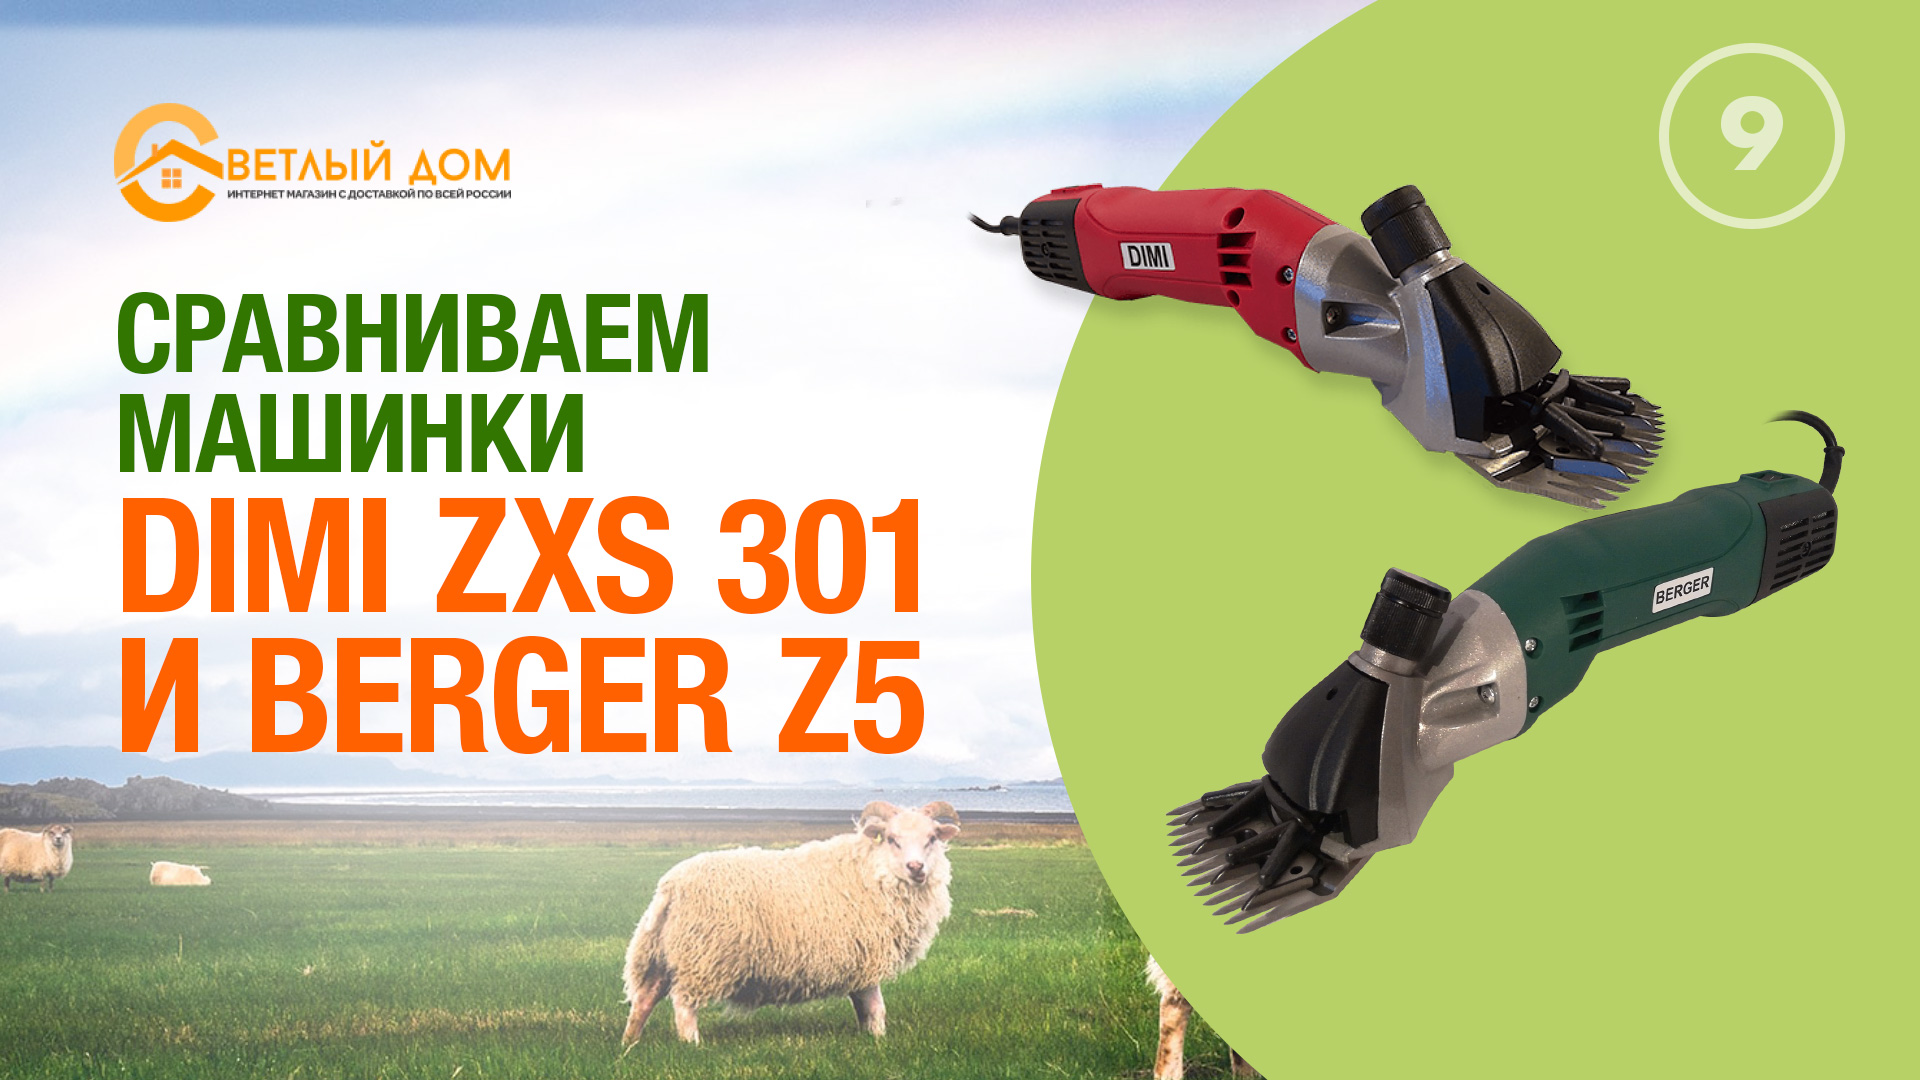 9. Обзор сравнение: машинка для стрижки овец Dimi ZXS 301 и машинка для стрижки овец Berger Z5.